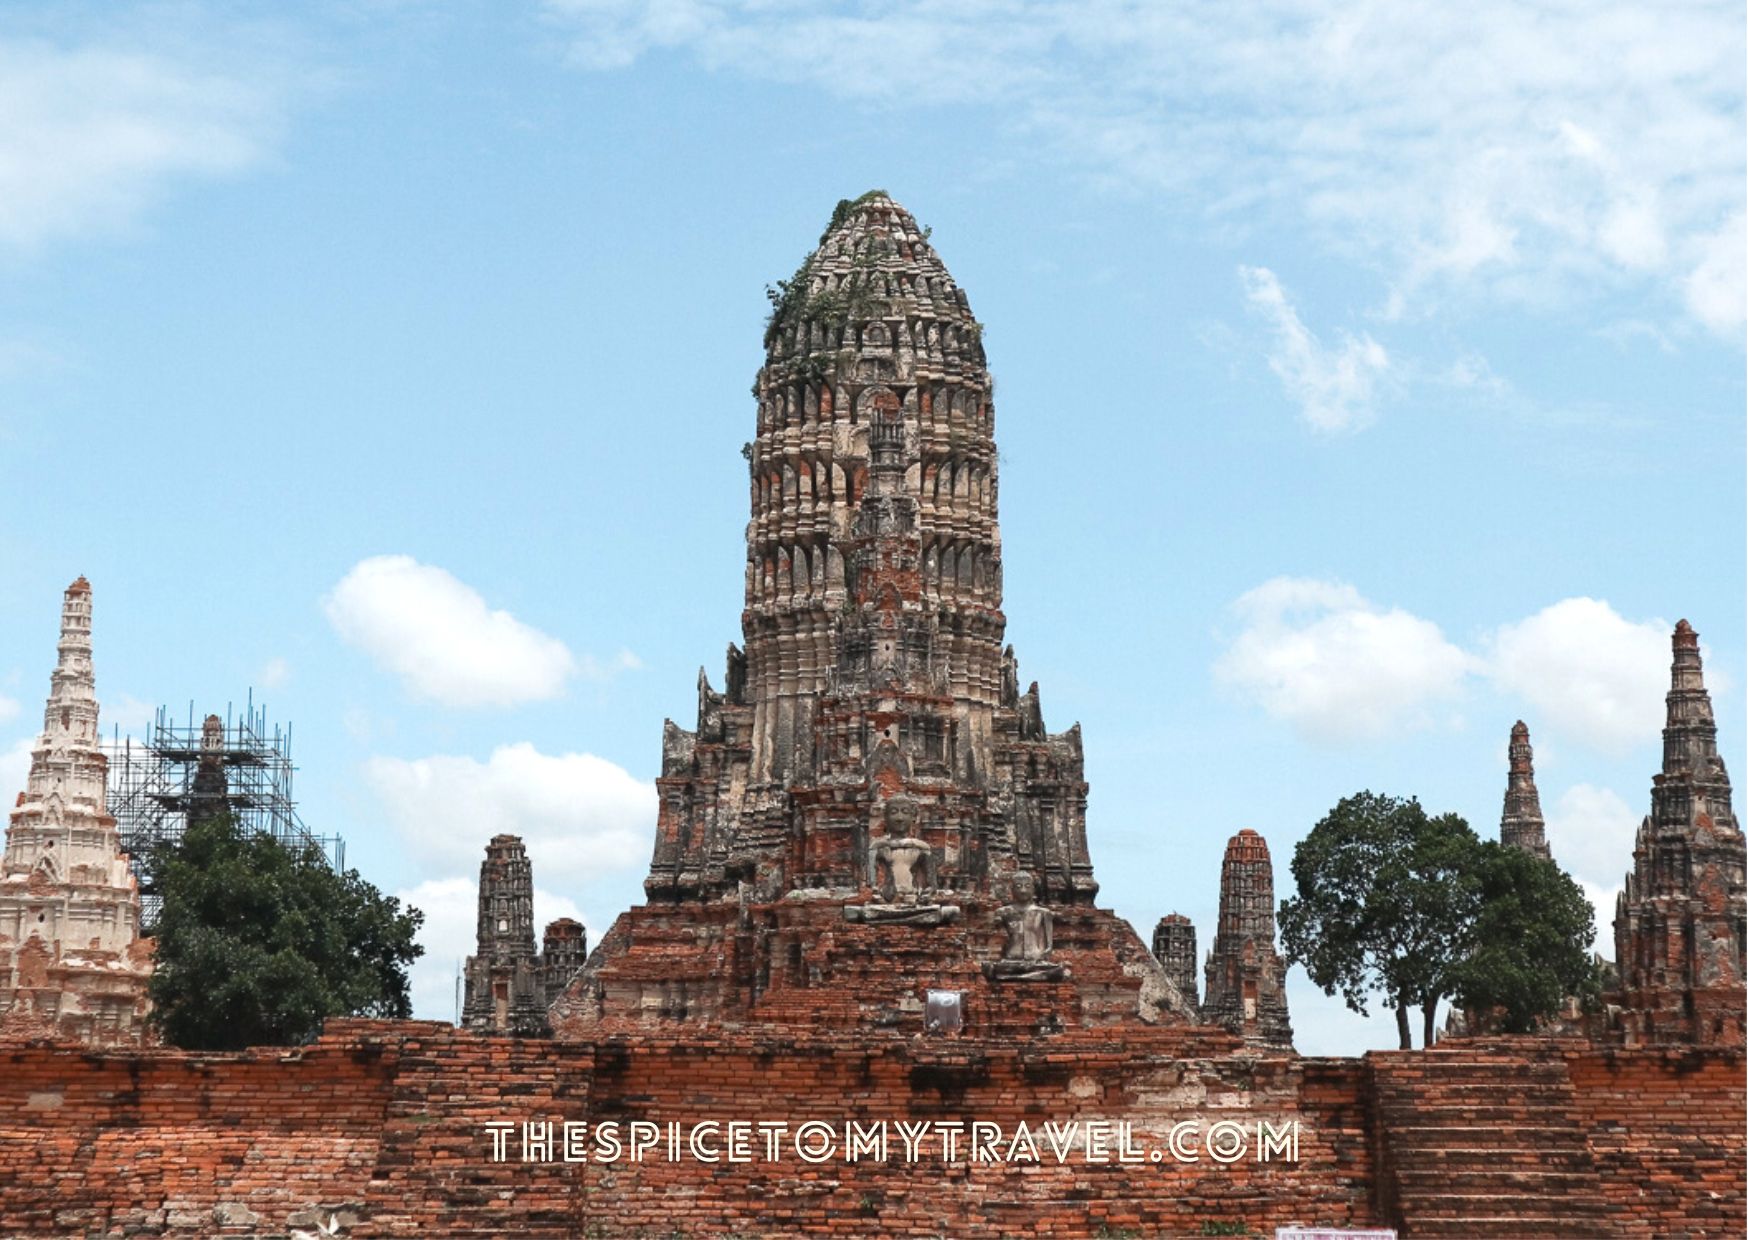 Jalan-jalan ke ayuttaya thailand mengunjungi kerajaan-kerajaan masa lalu